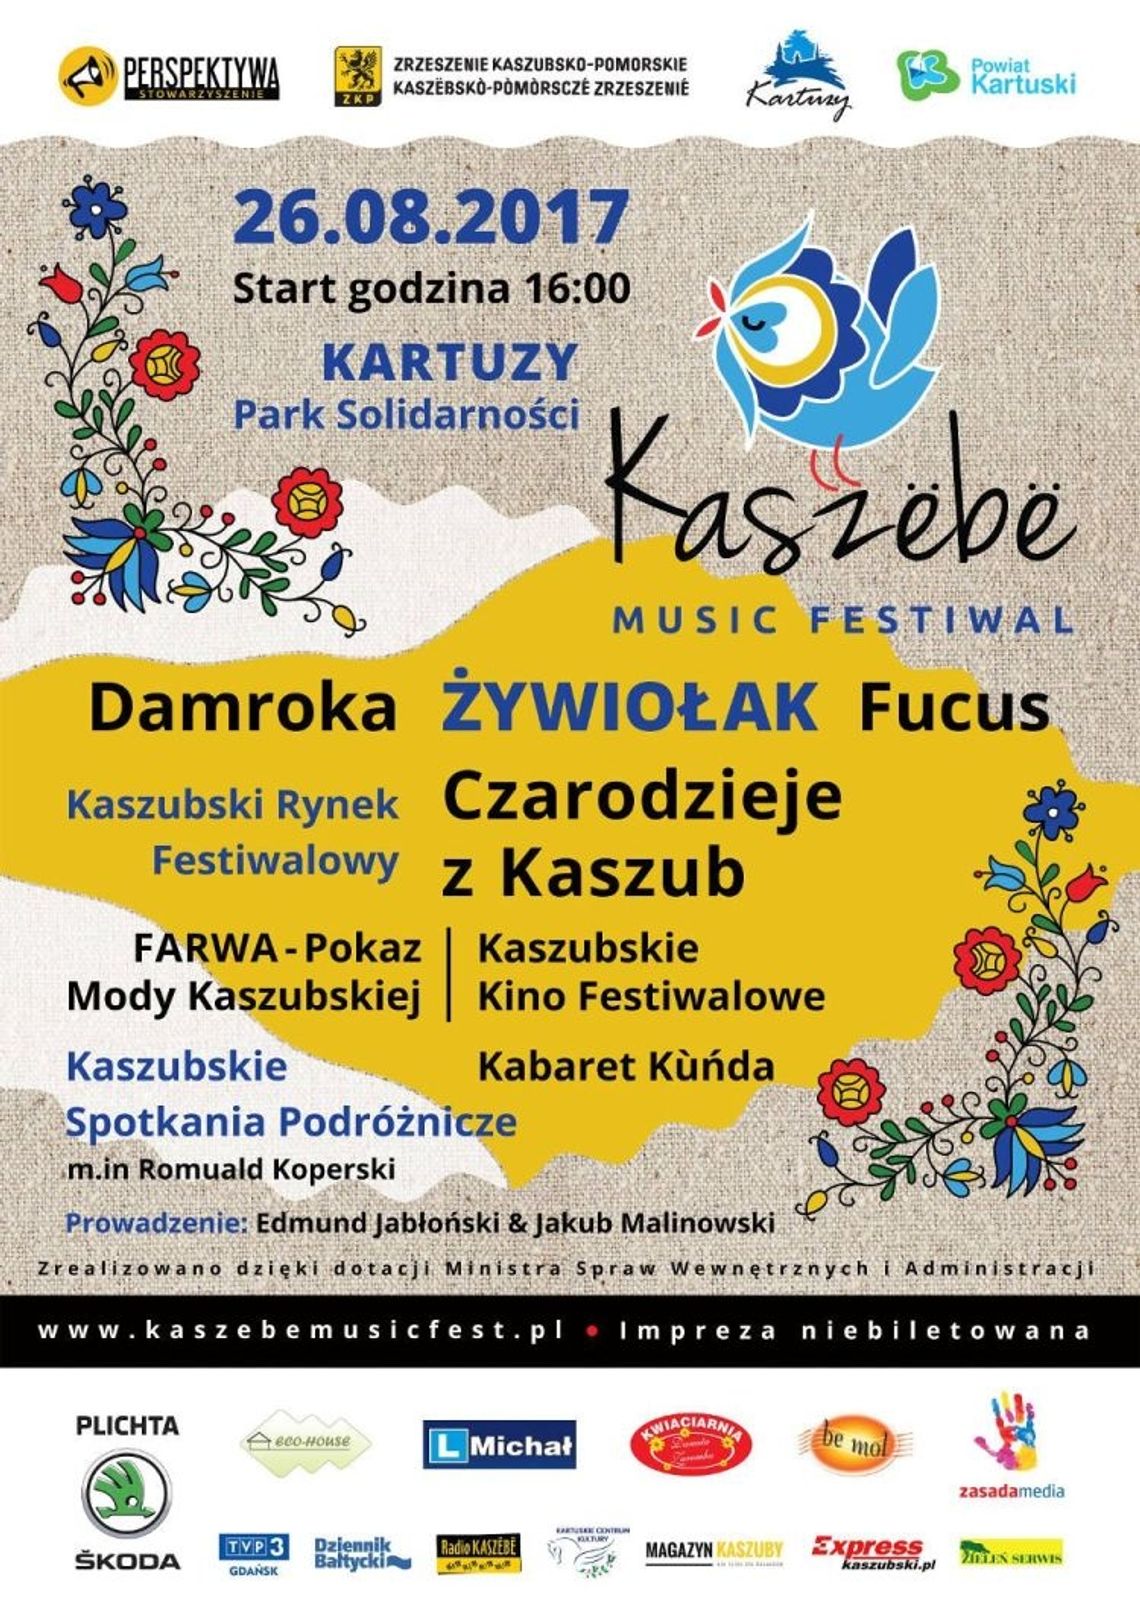 Kaszëbë Music Festiwal